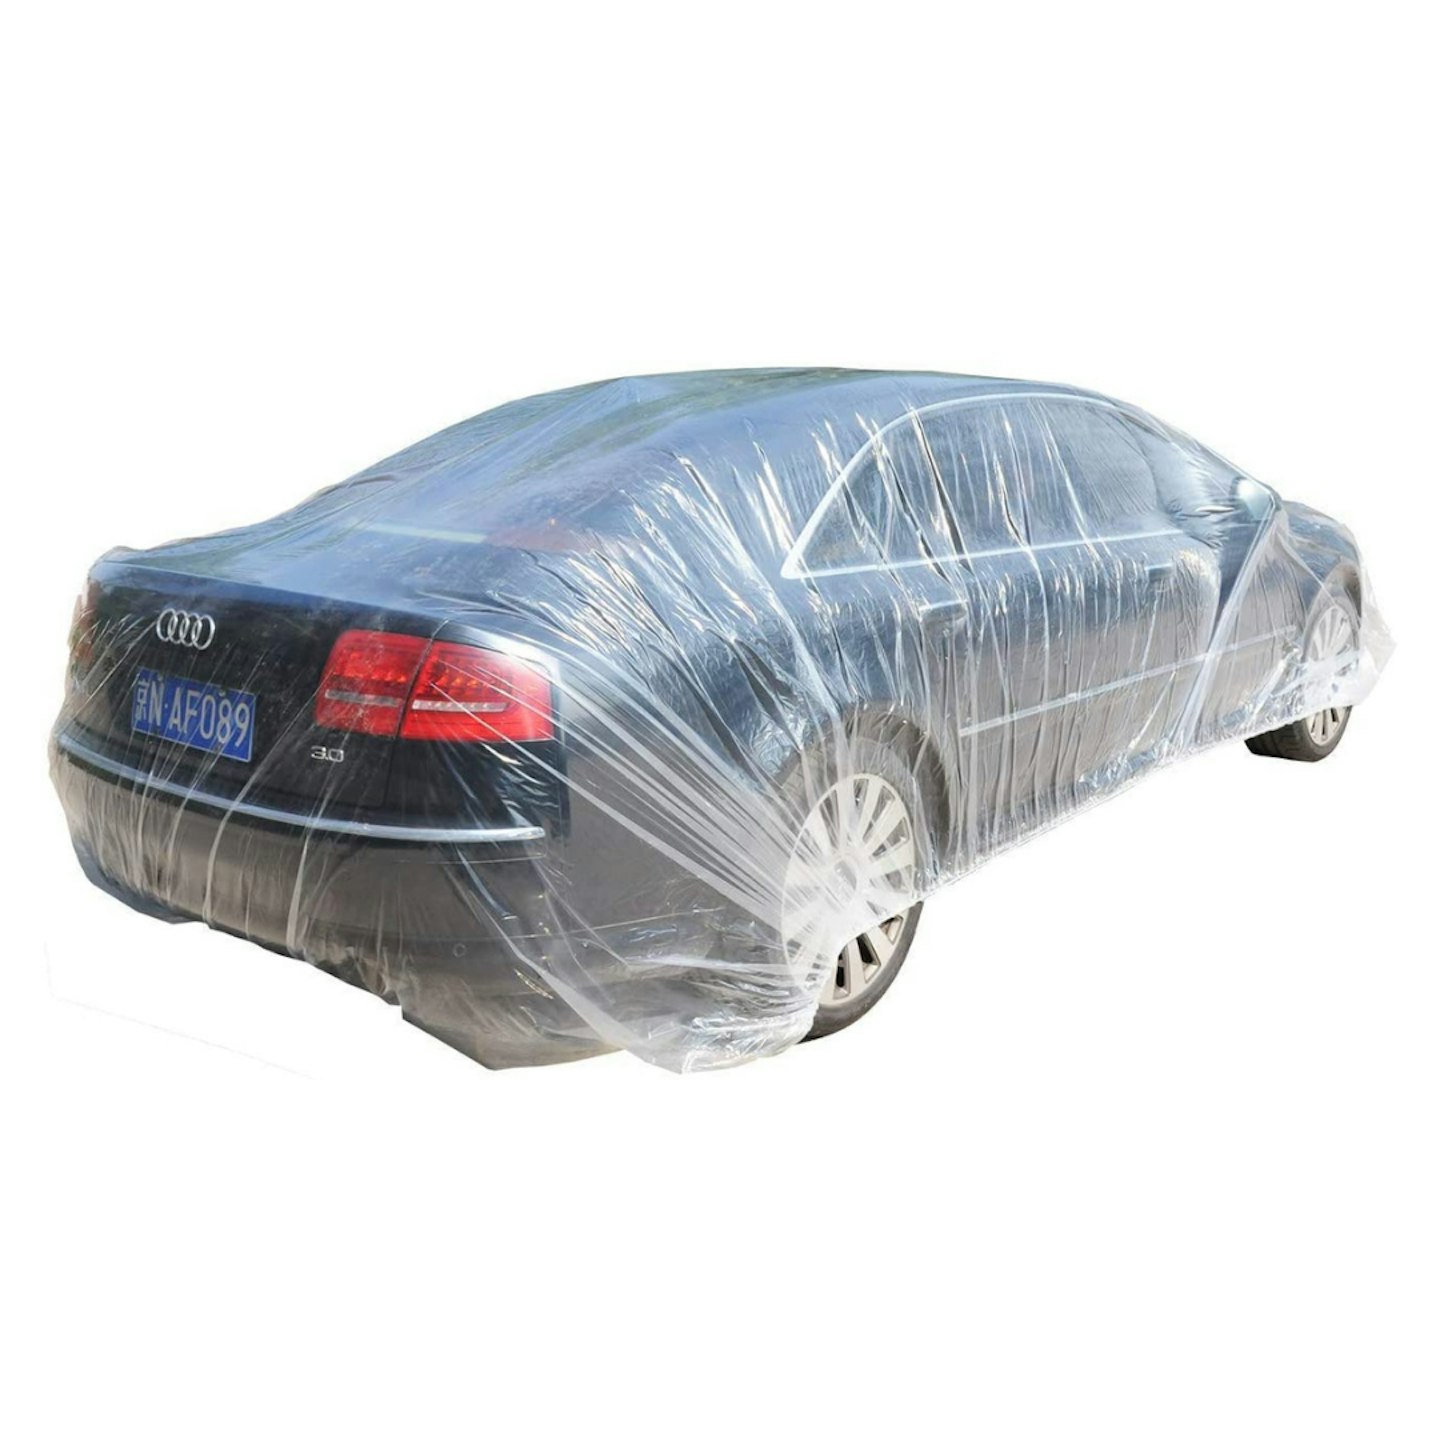 TopSoon waterproof plastic car cover